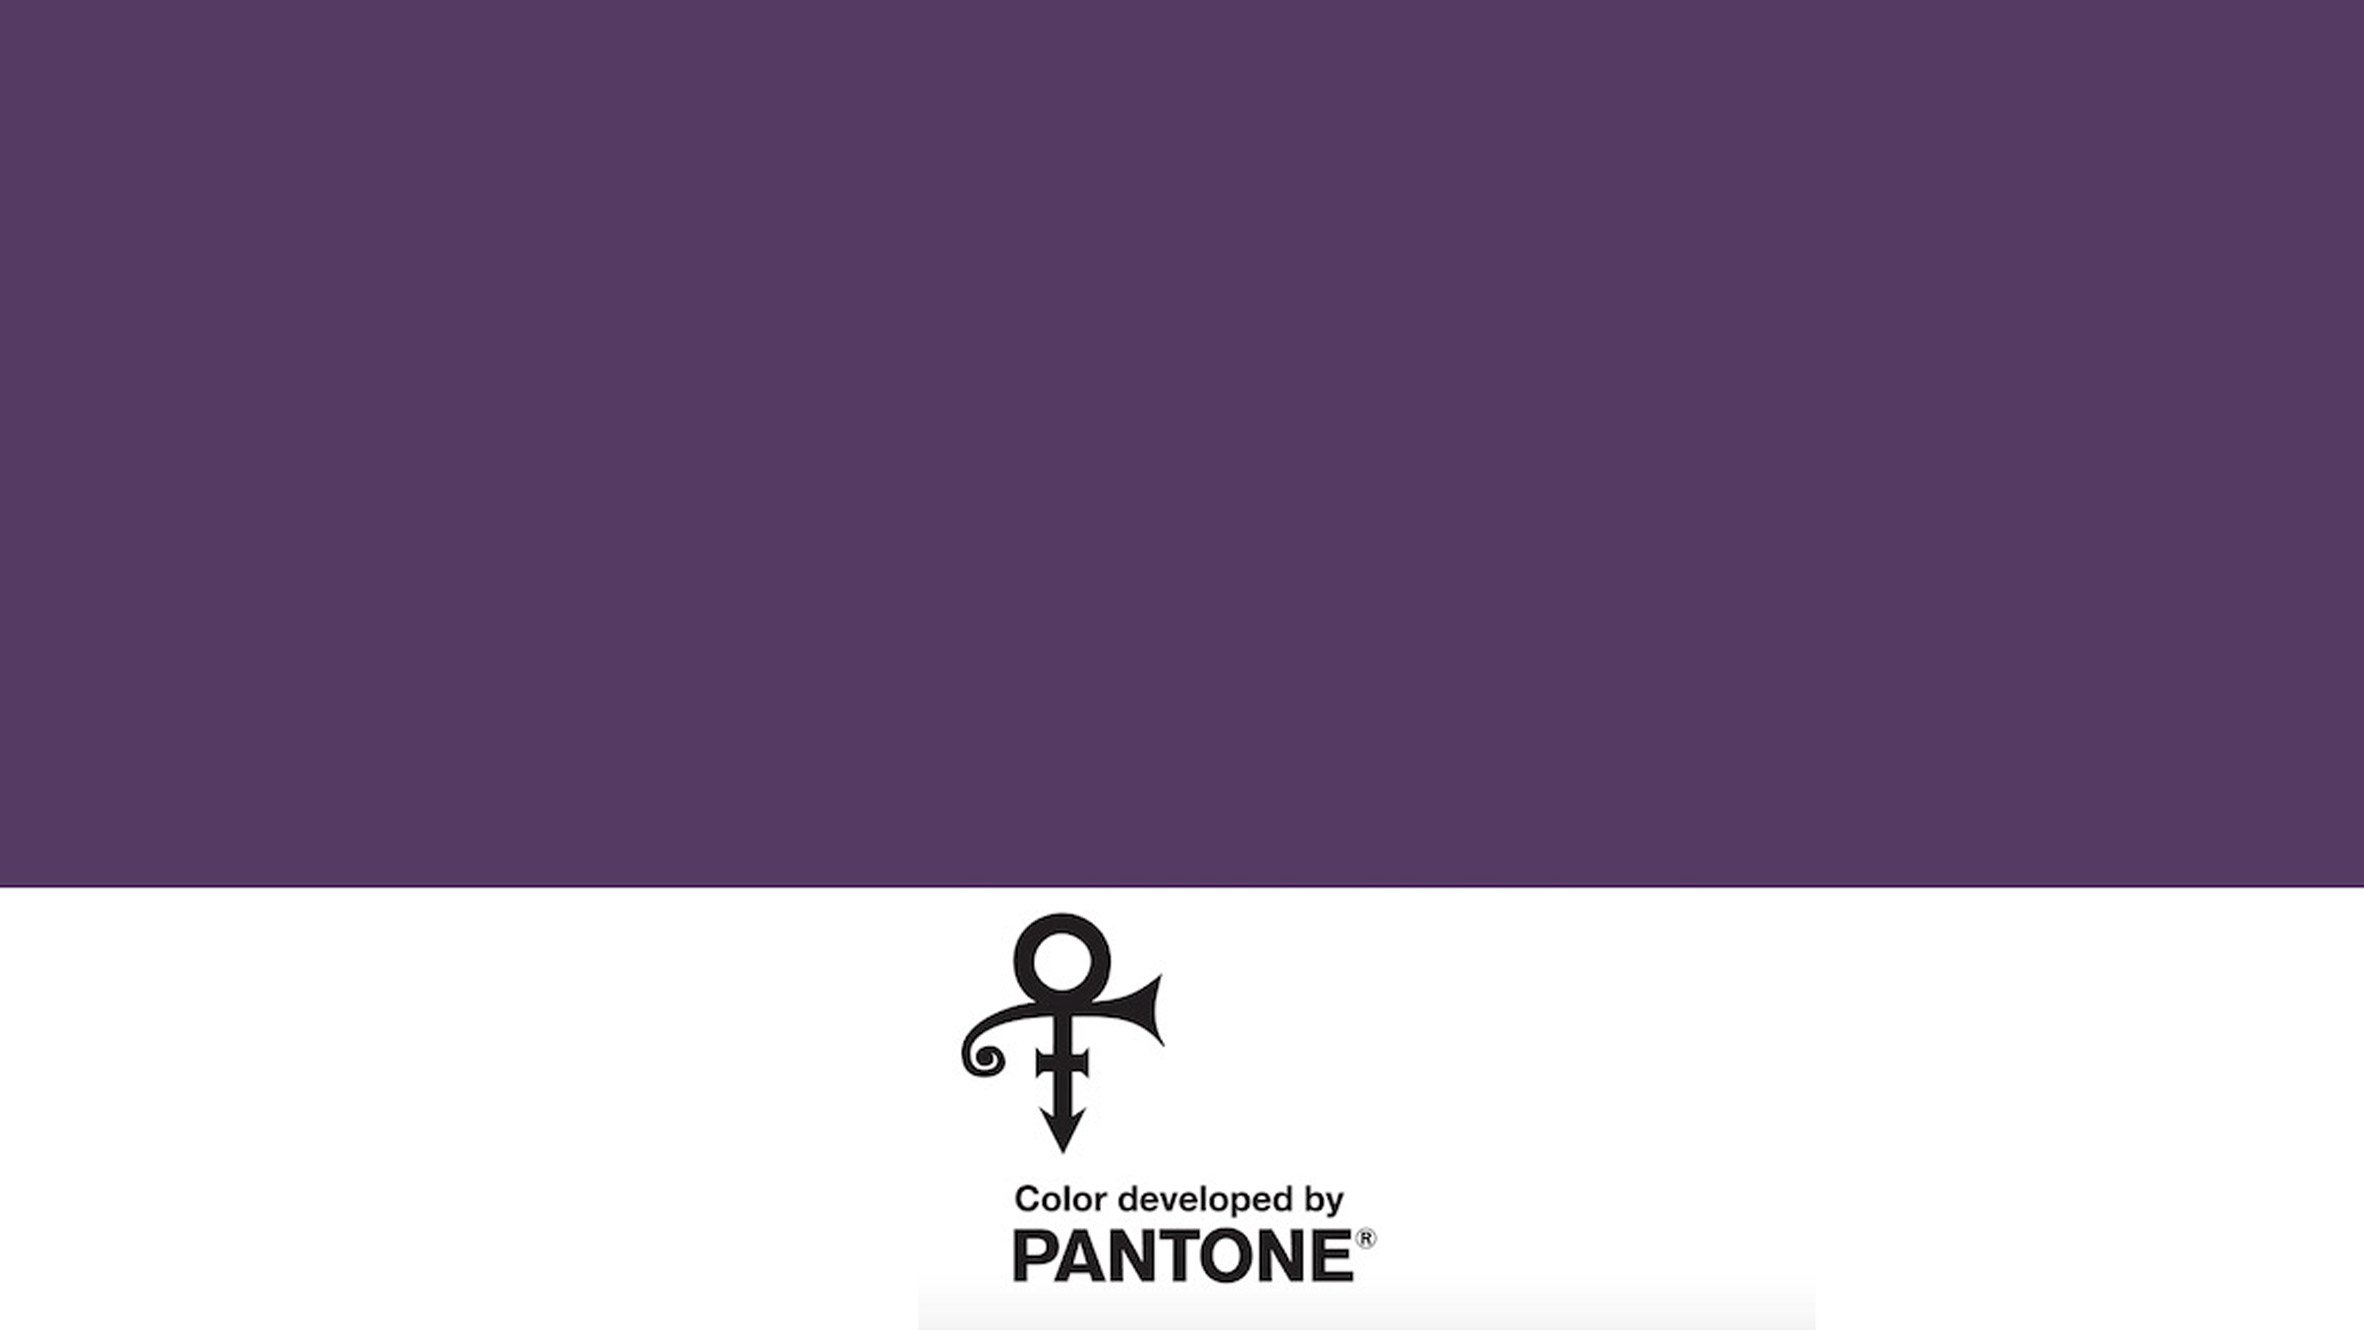 Prince Pantone custom color